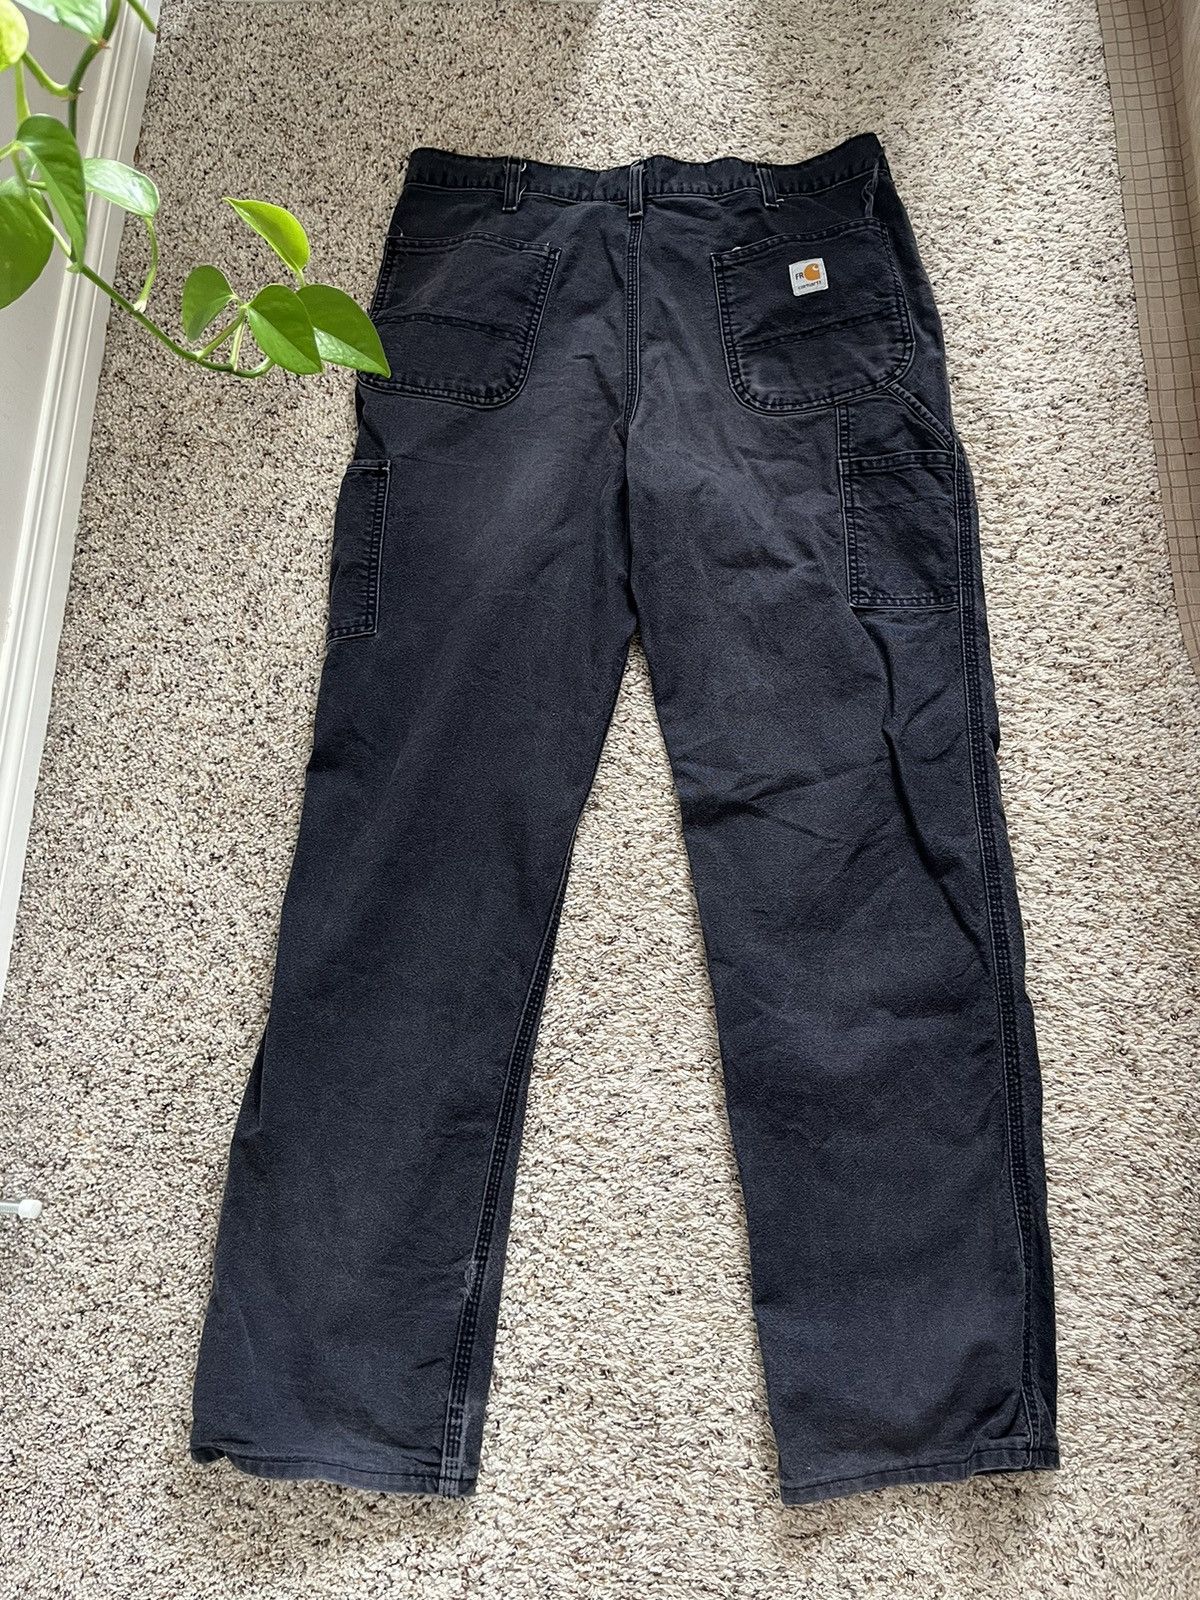 Vintage Vintage Faded Black Carhartt Carpenter Pants Size US 36 / EU 52 - 4 Thumbnail